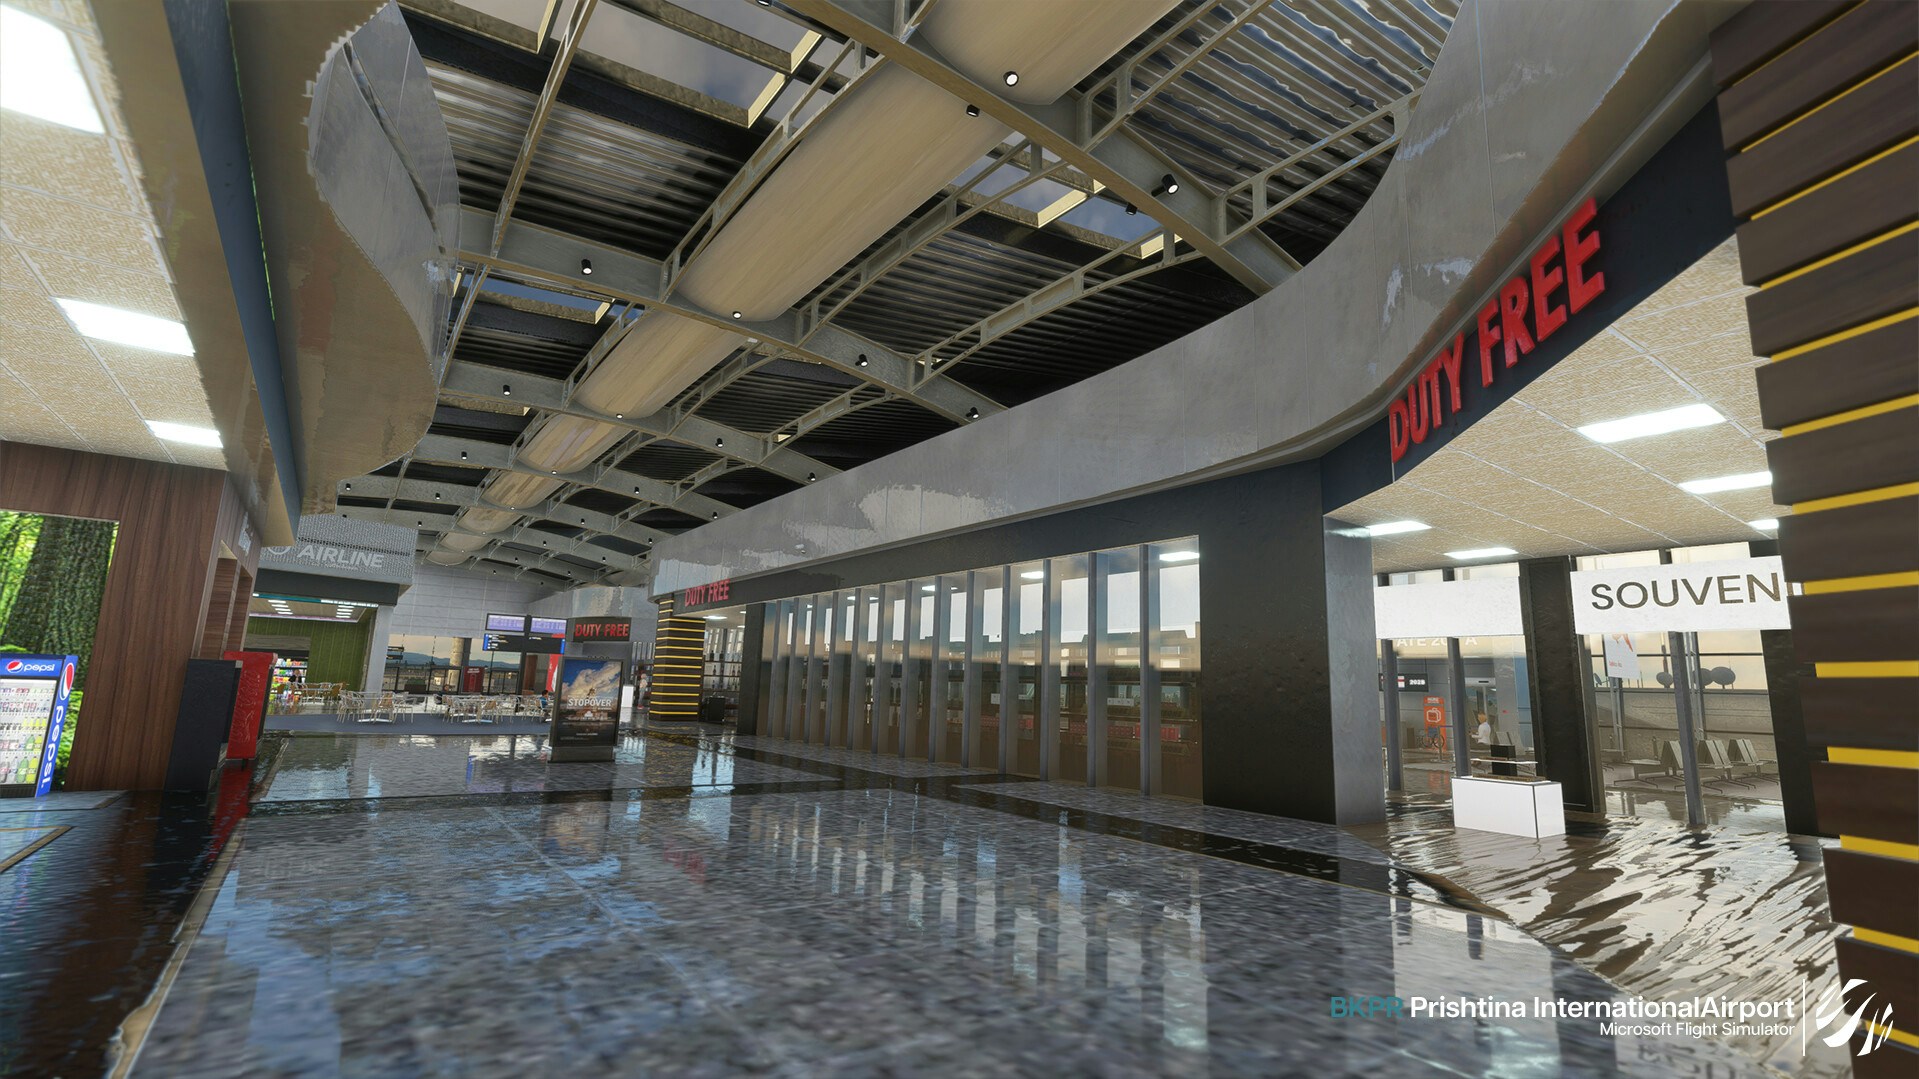 M'M Simulations Releases Prishtina International Airport for MSFS